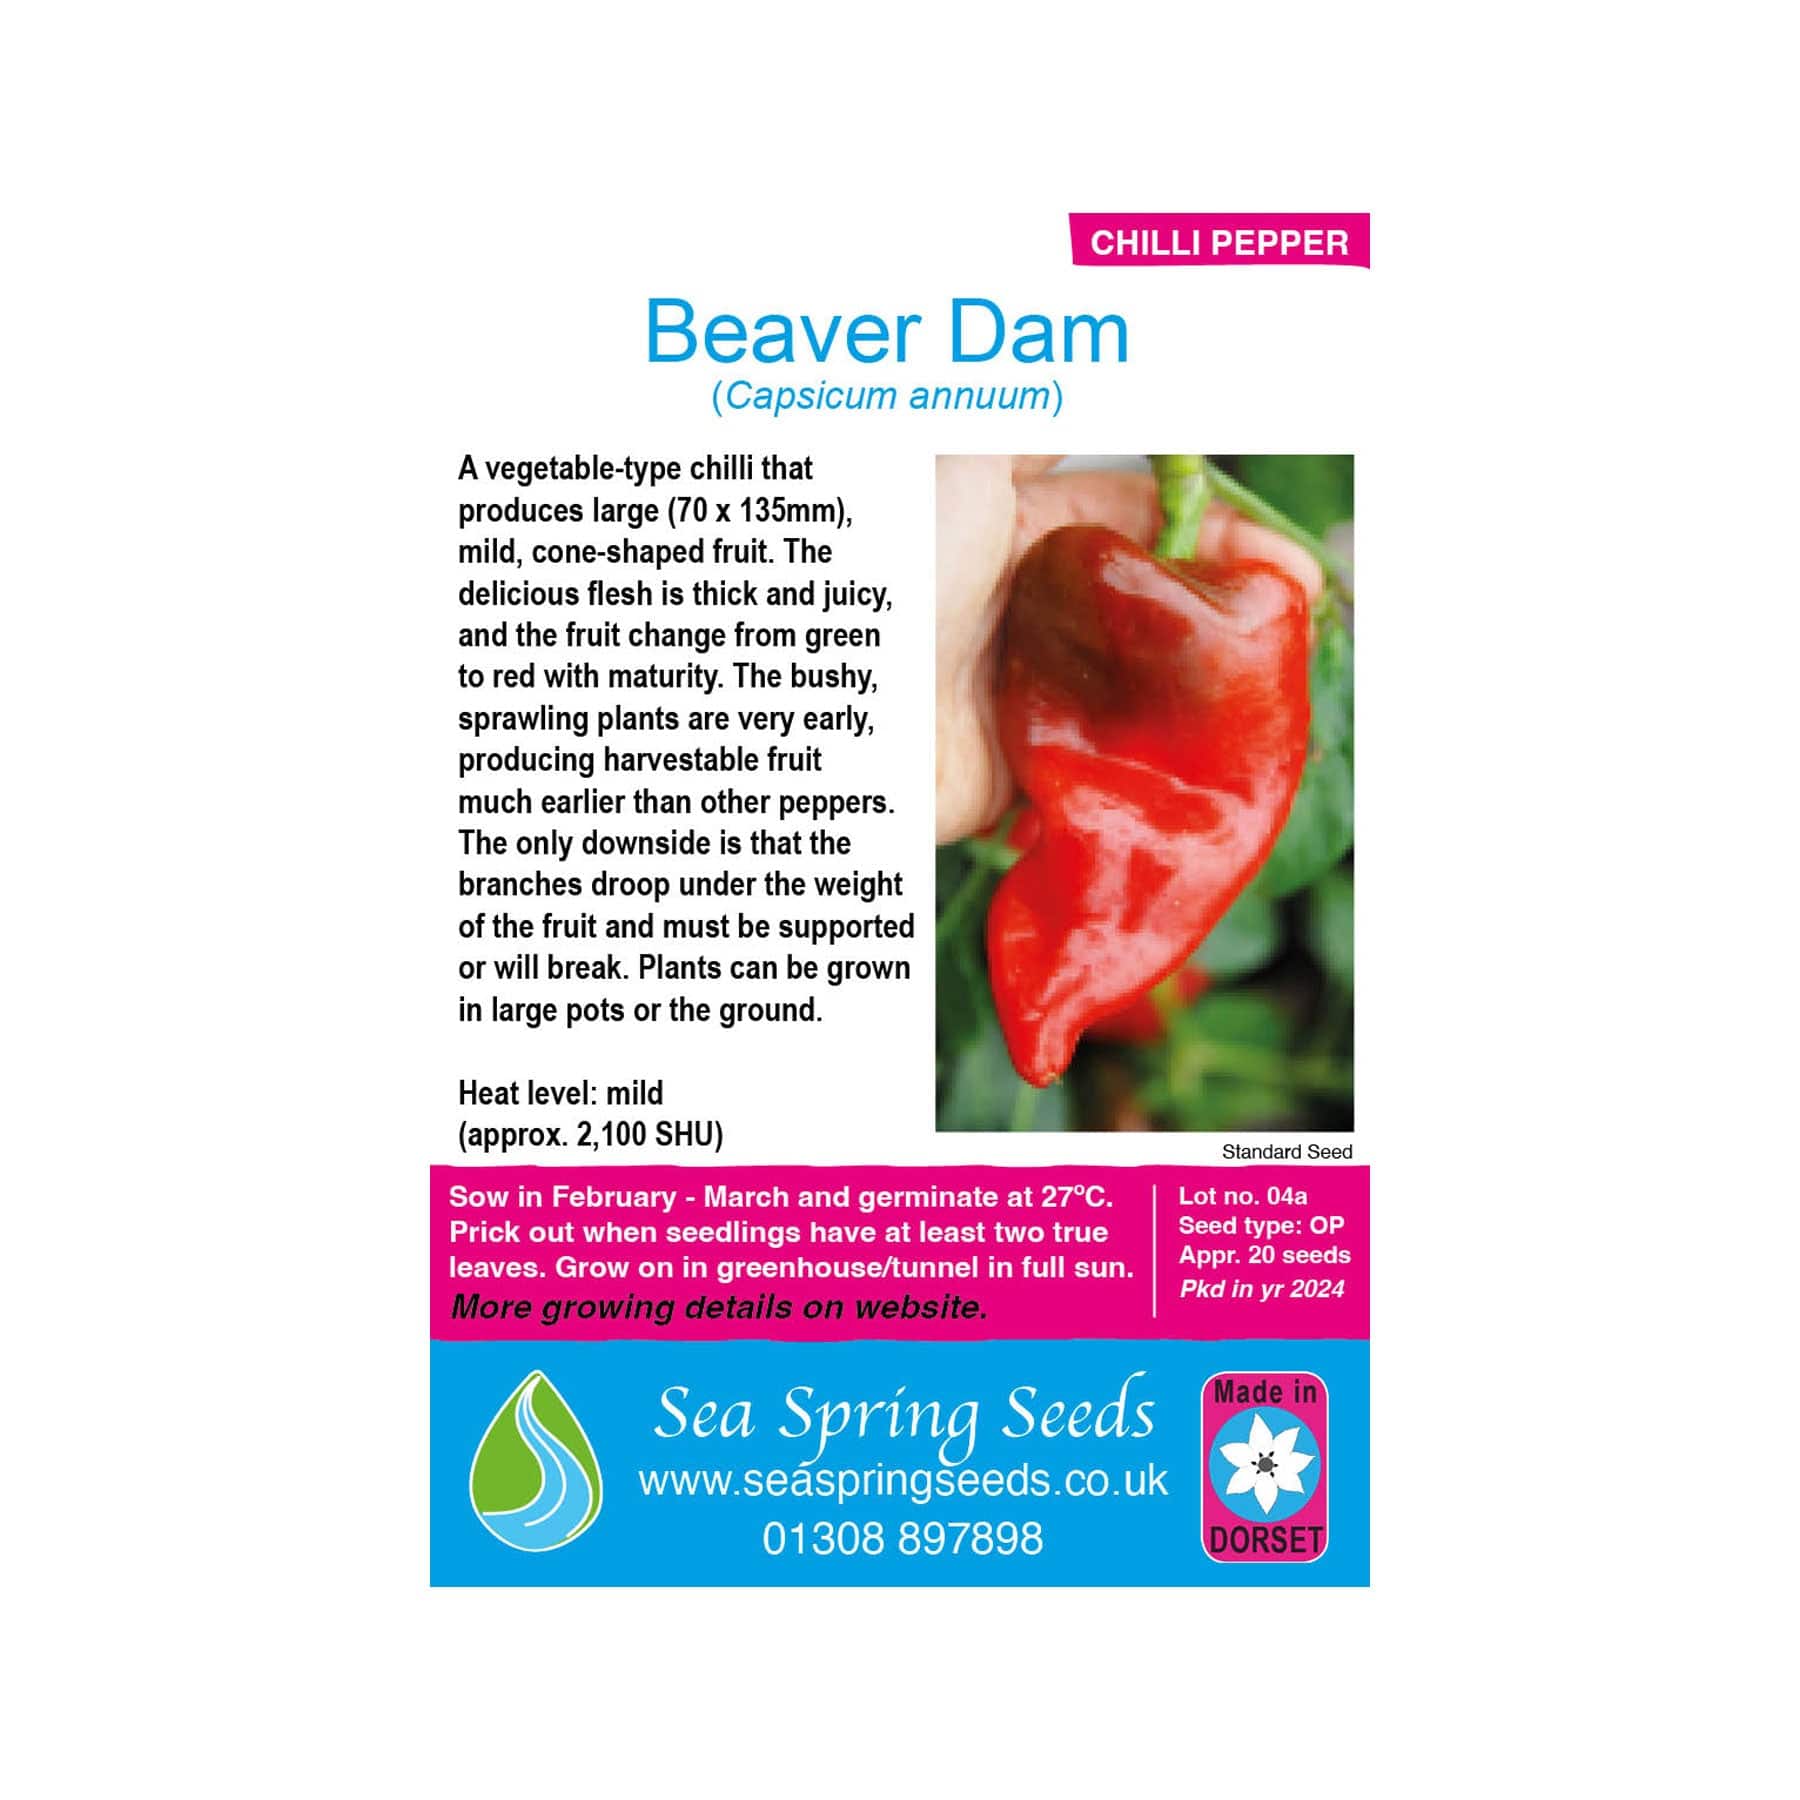 Beaver dam chilli seeds